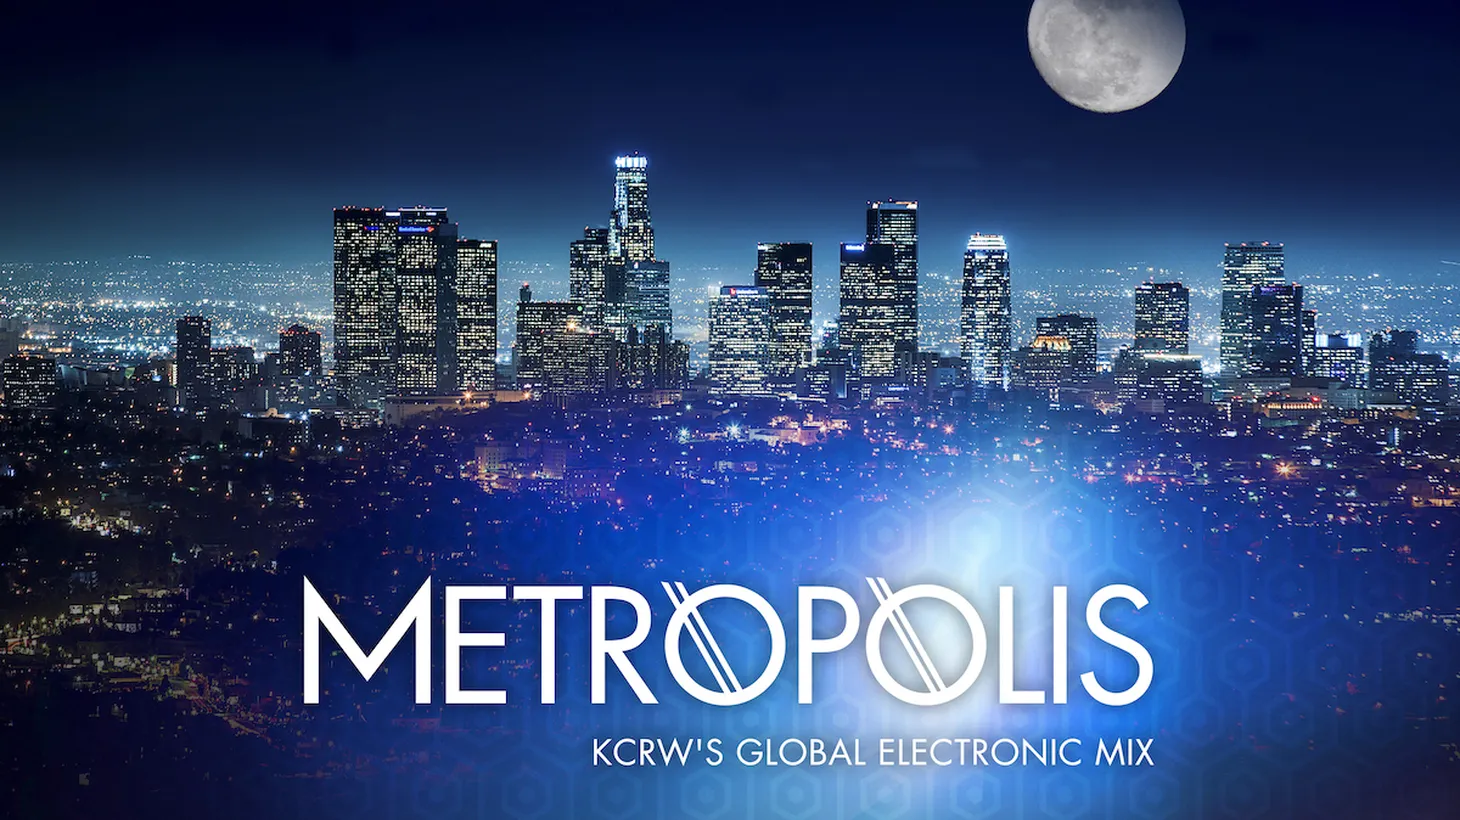 Metropolis playlist, March 26, 2022.